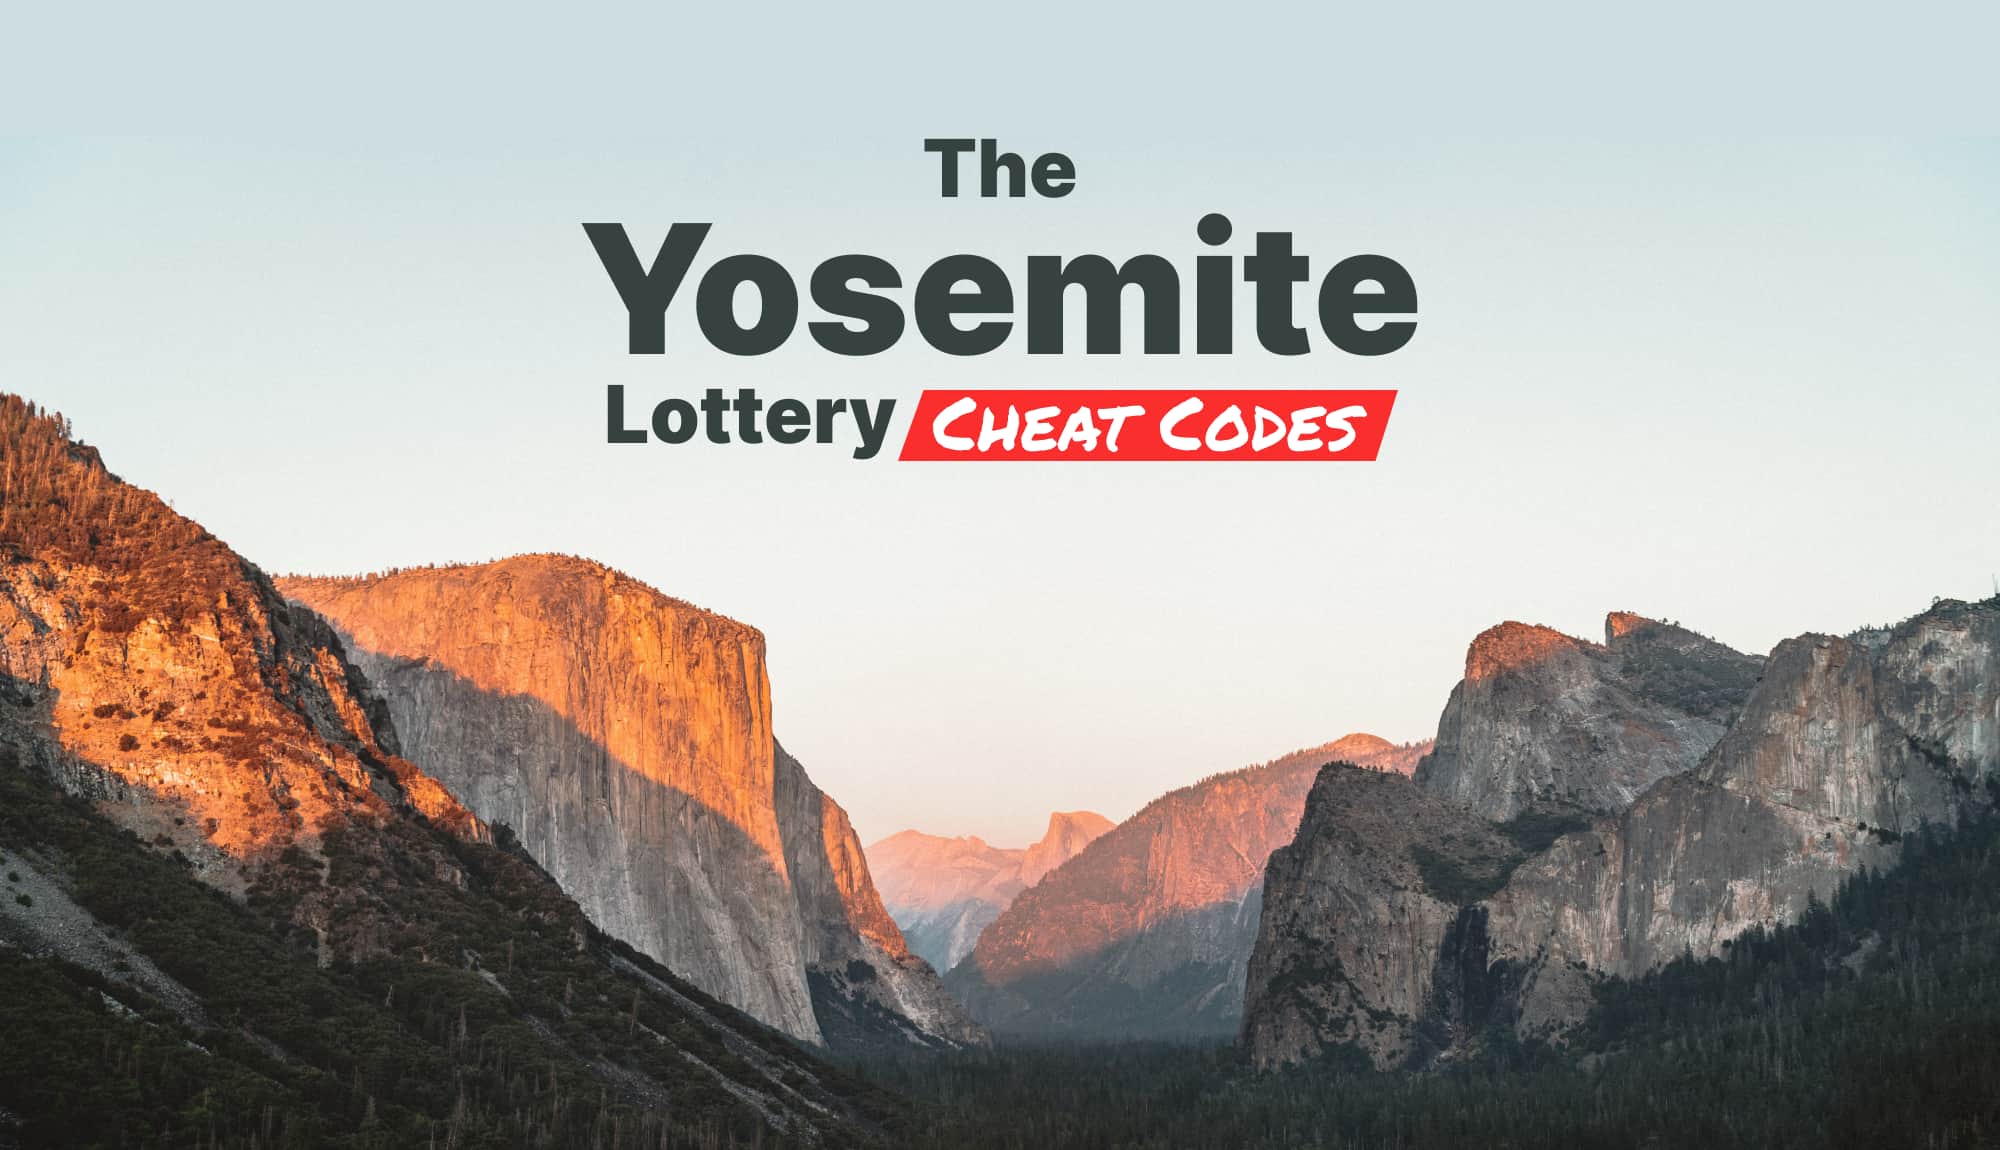 The Yosemite Lottery Cheat Codes